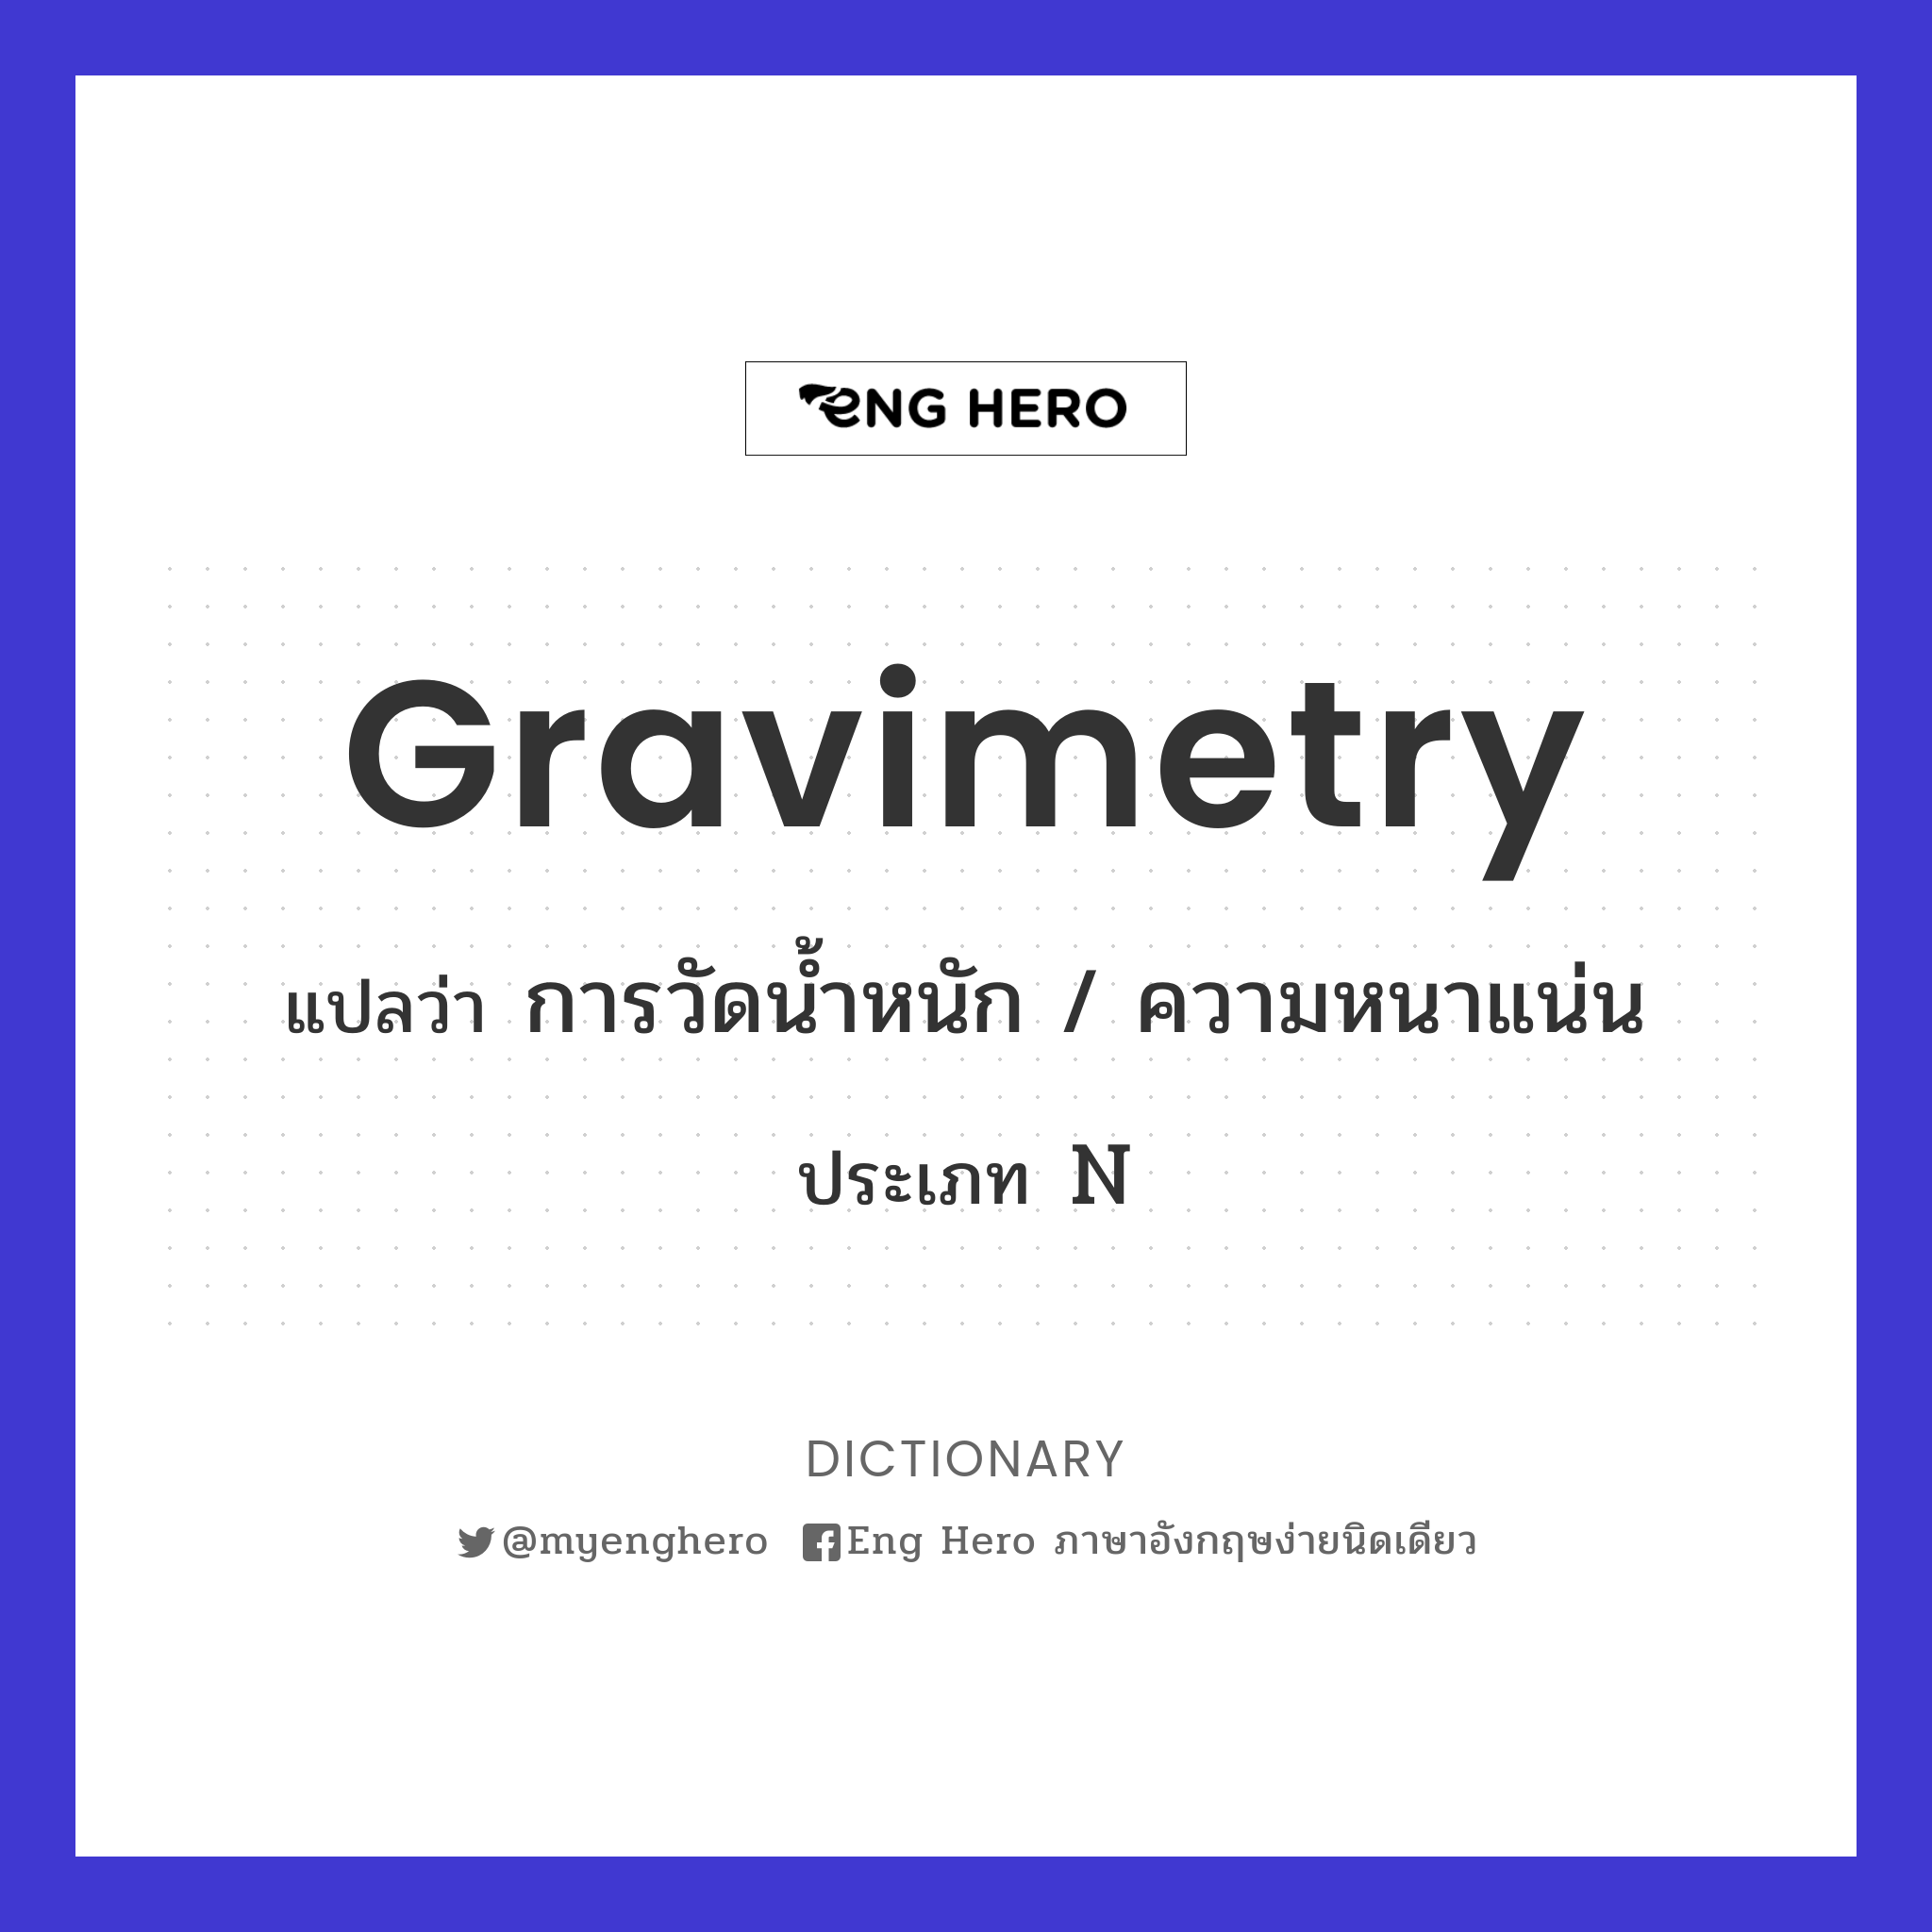 gravimetry